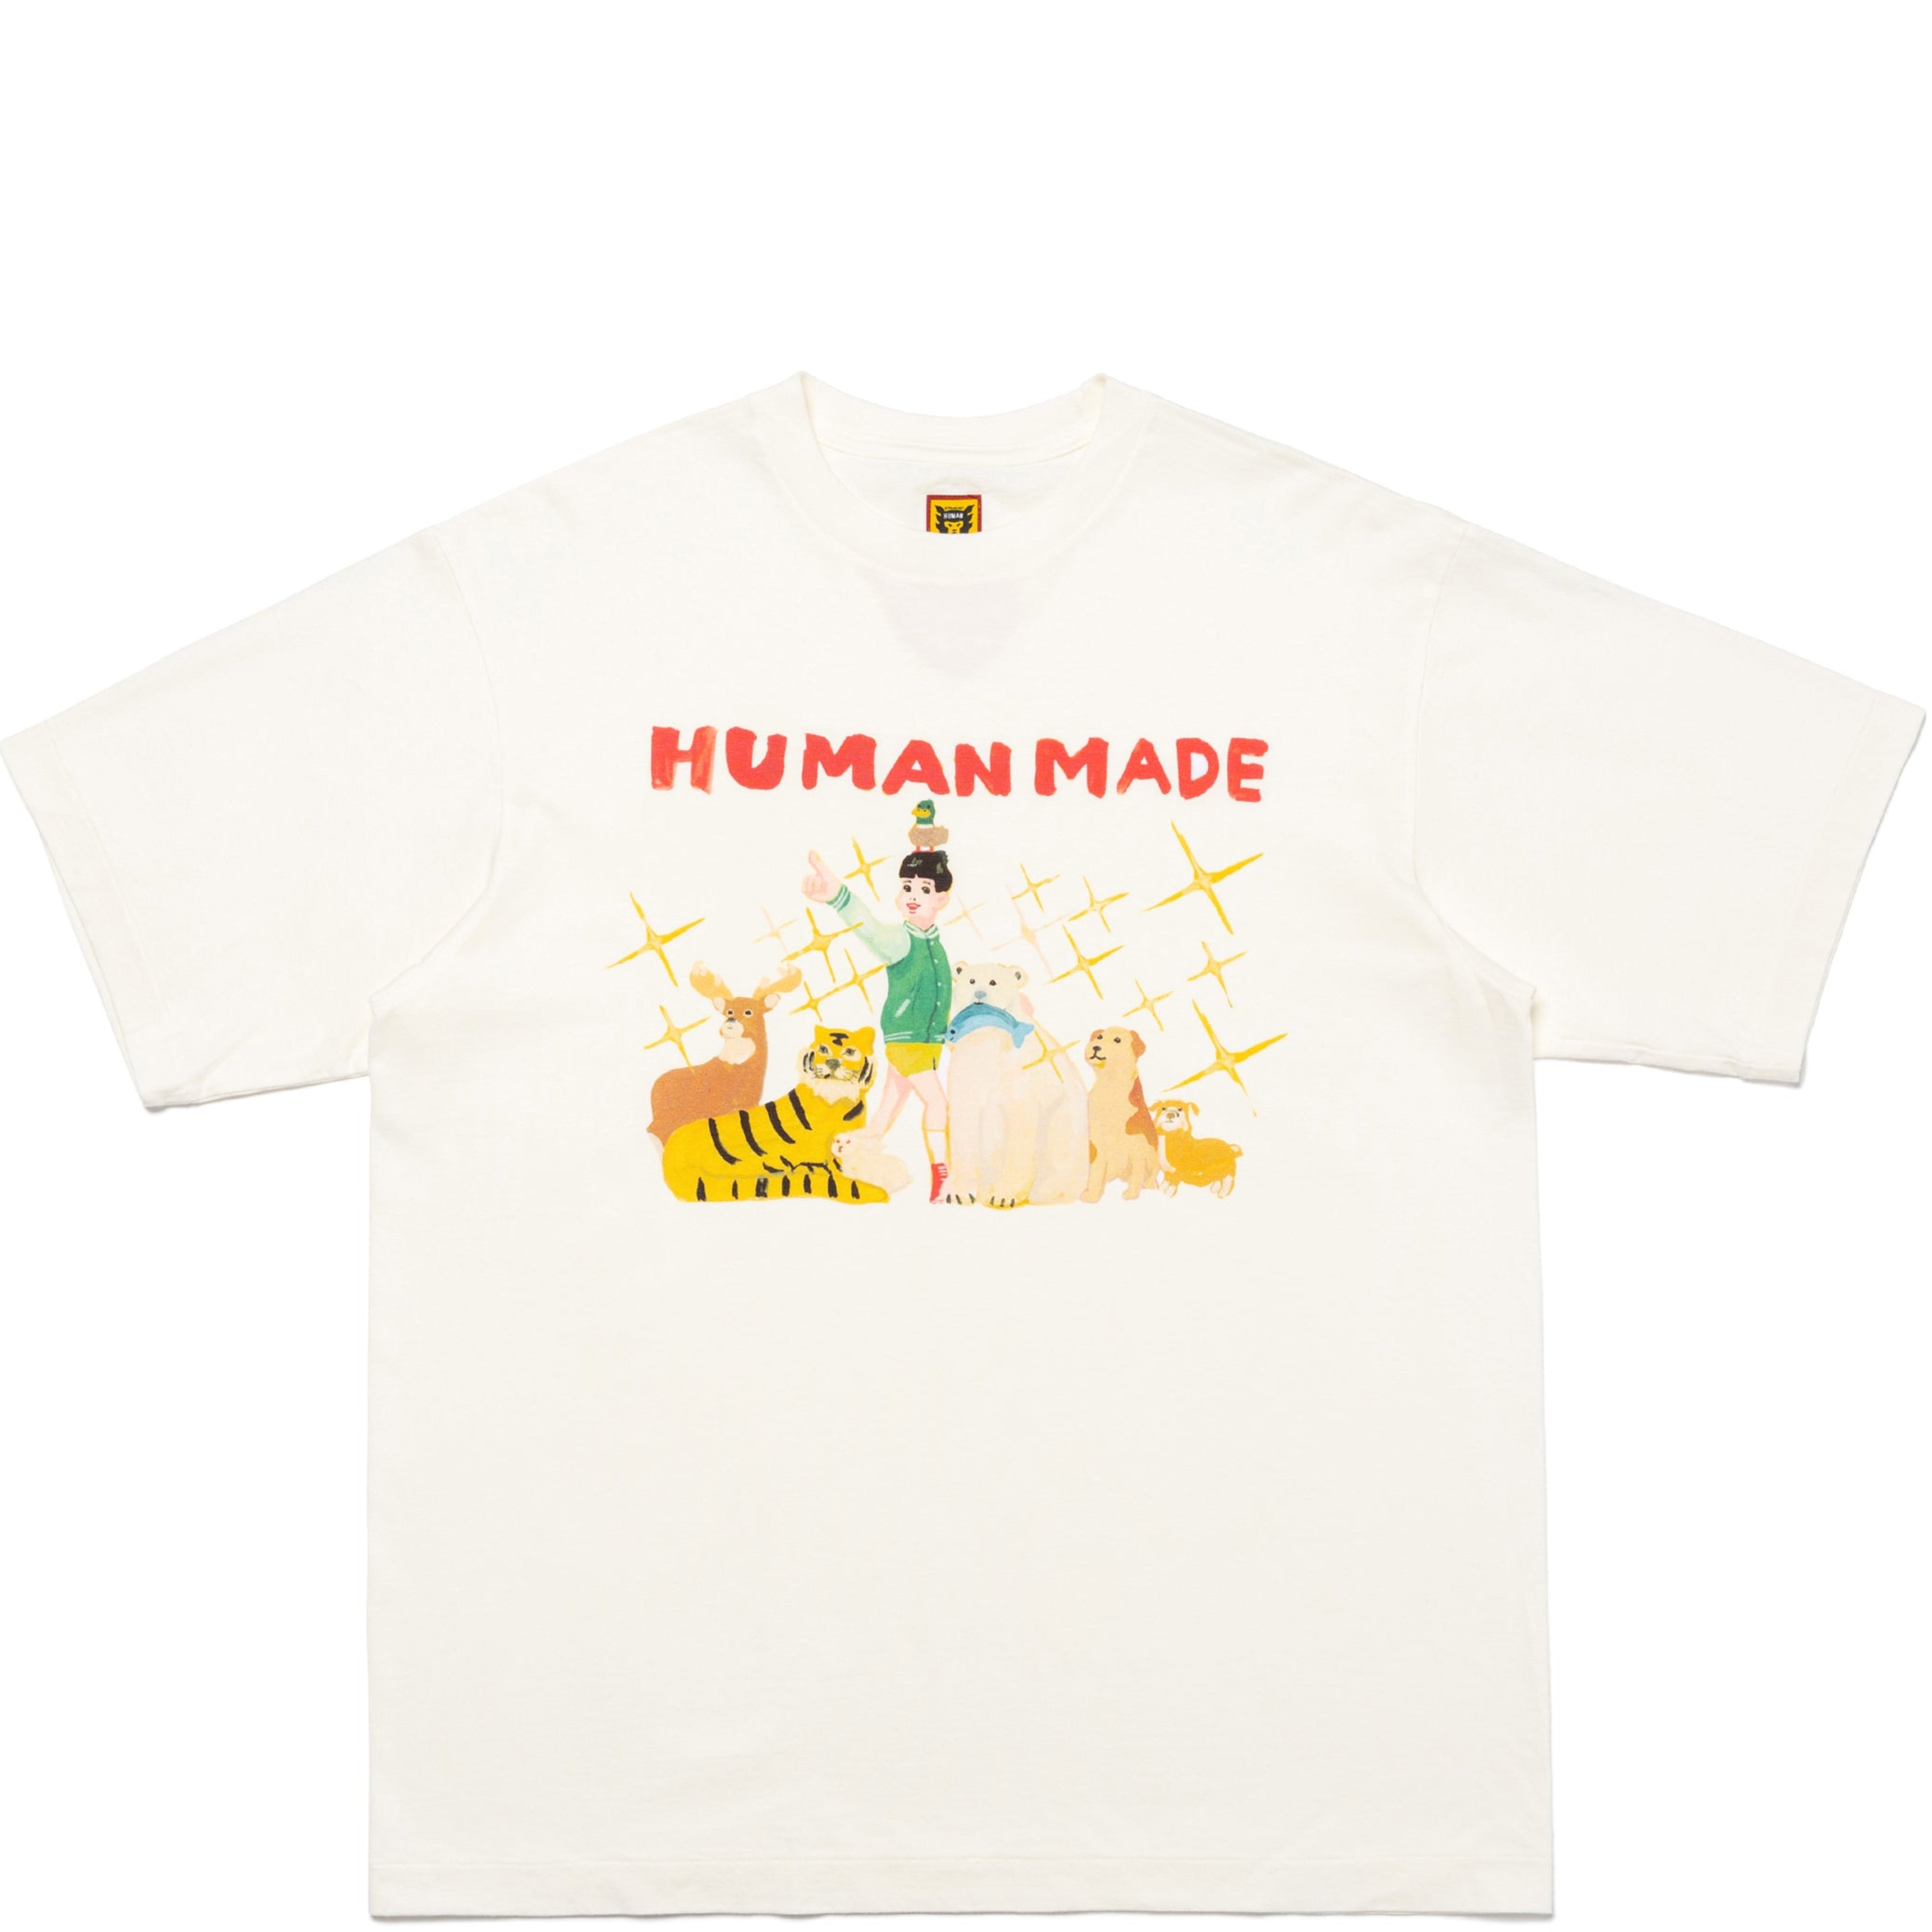 humanmadeHUMAN MADE Keiko Sootome